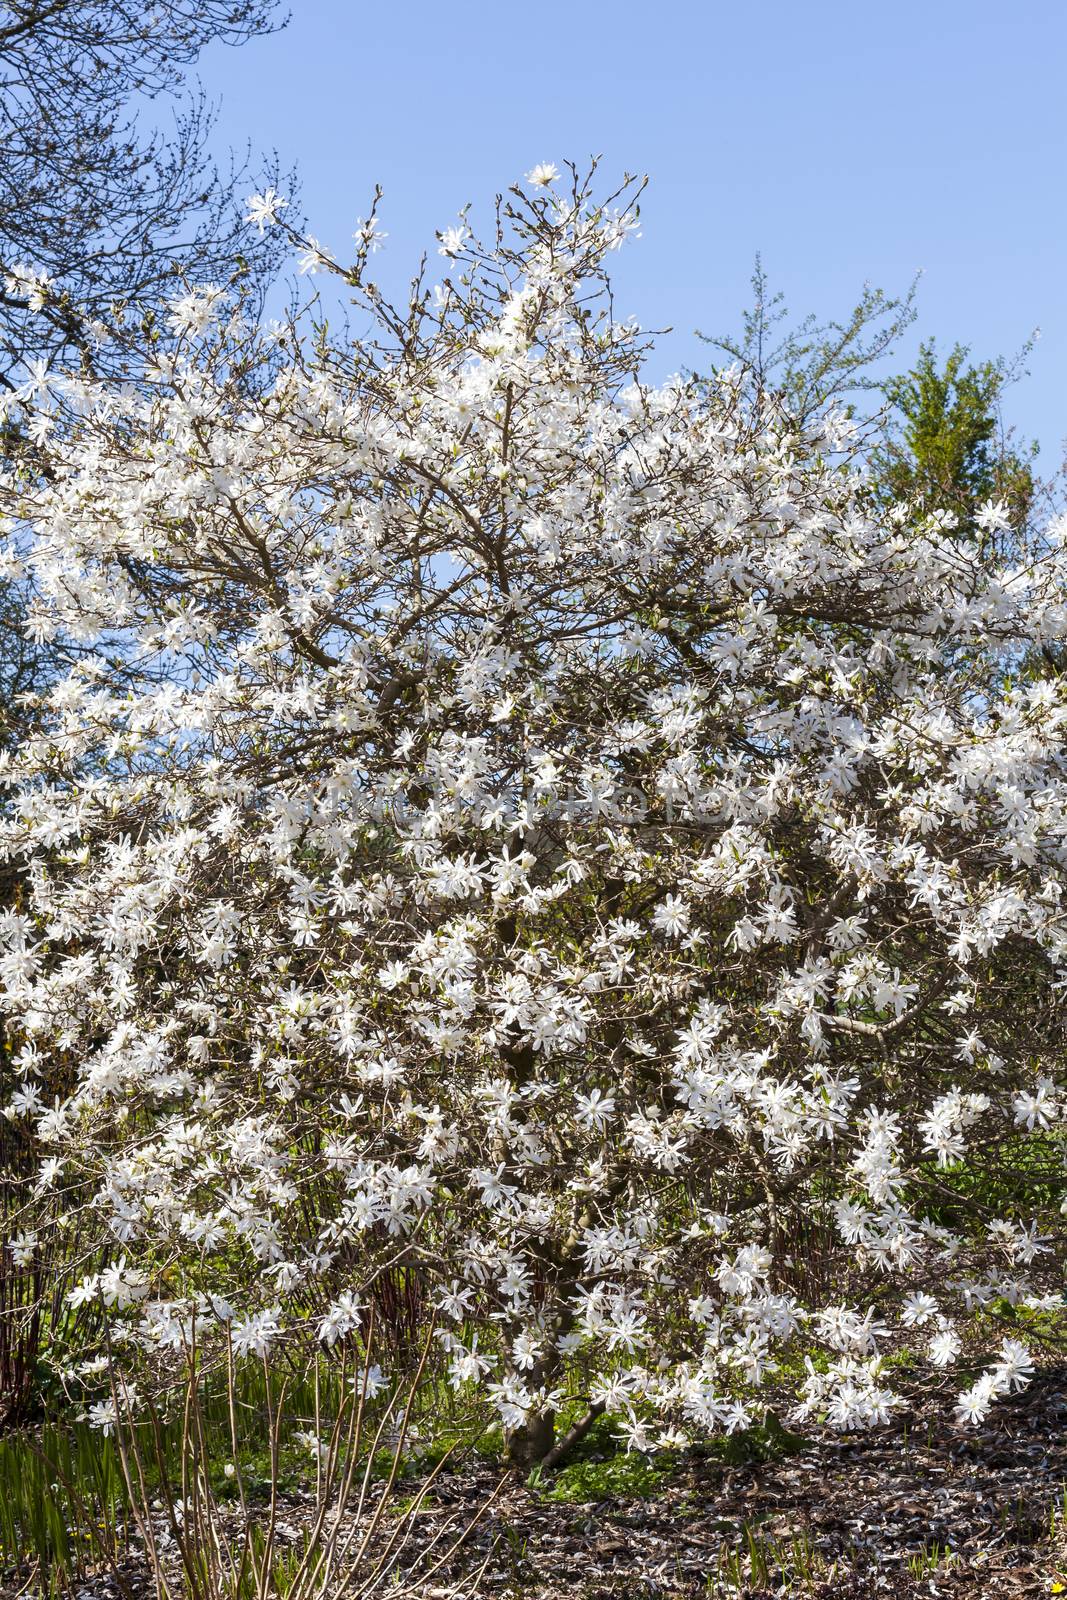 Star magnolia a winter spring white flower shrub or small tree